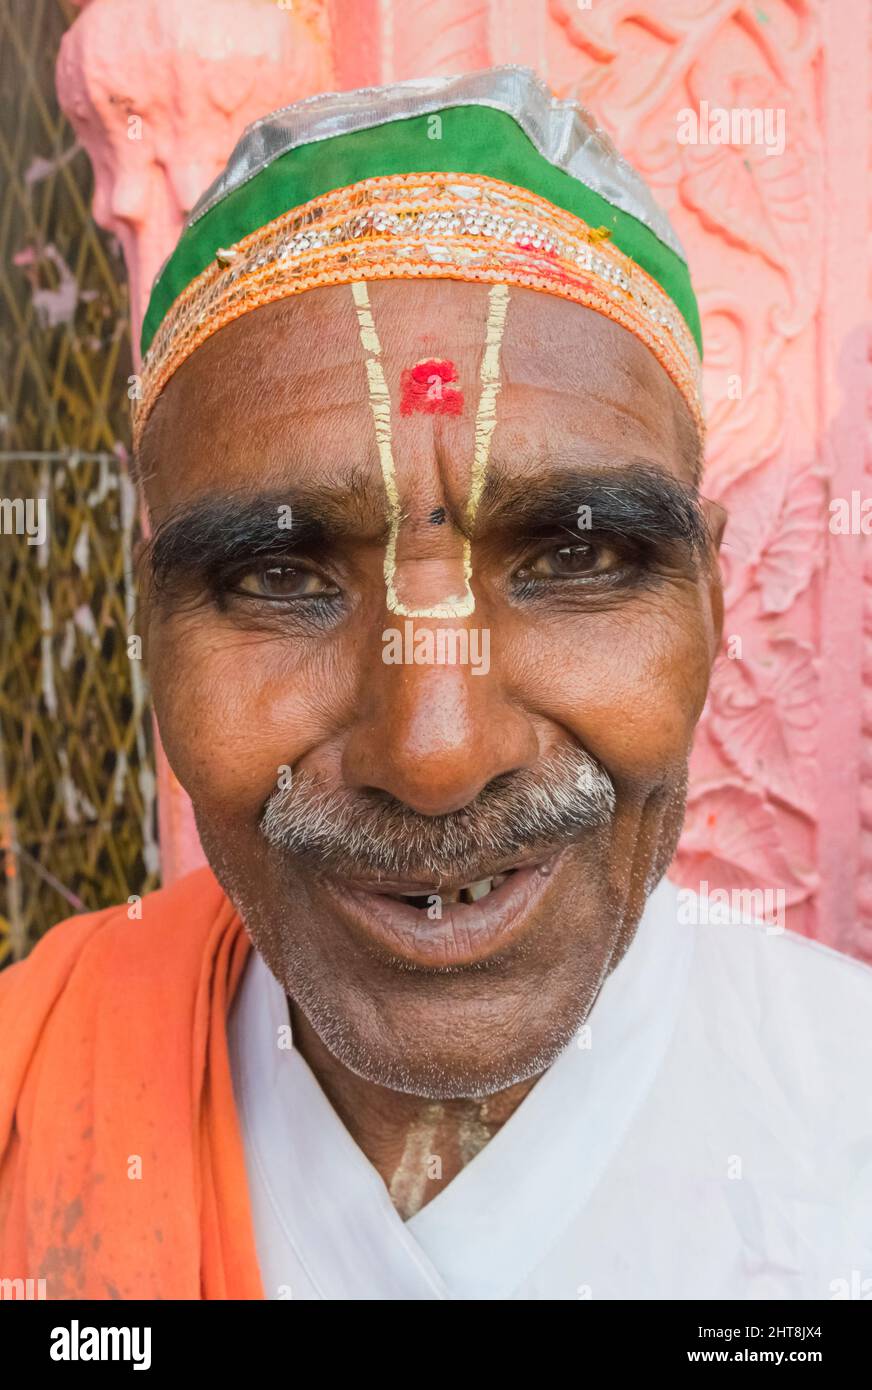 An old Indian man in traditional clothing, Baldeo, Mathura District, Uttar Pradesh, India Stock Photo